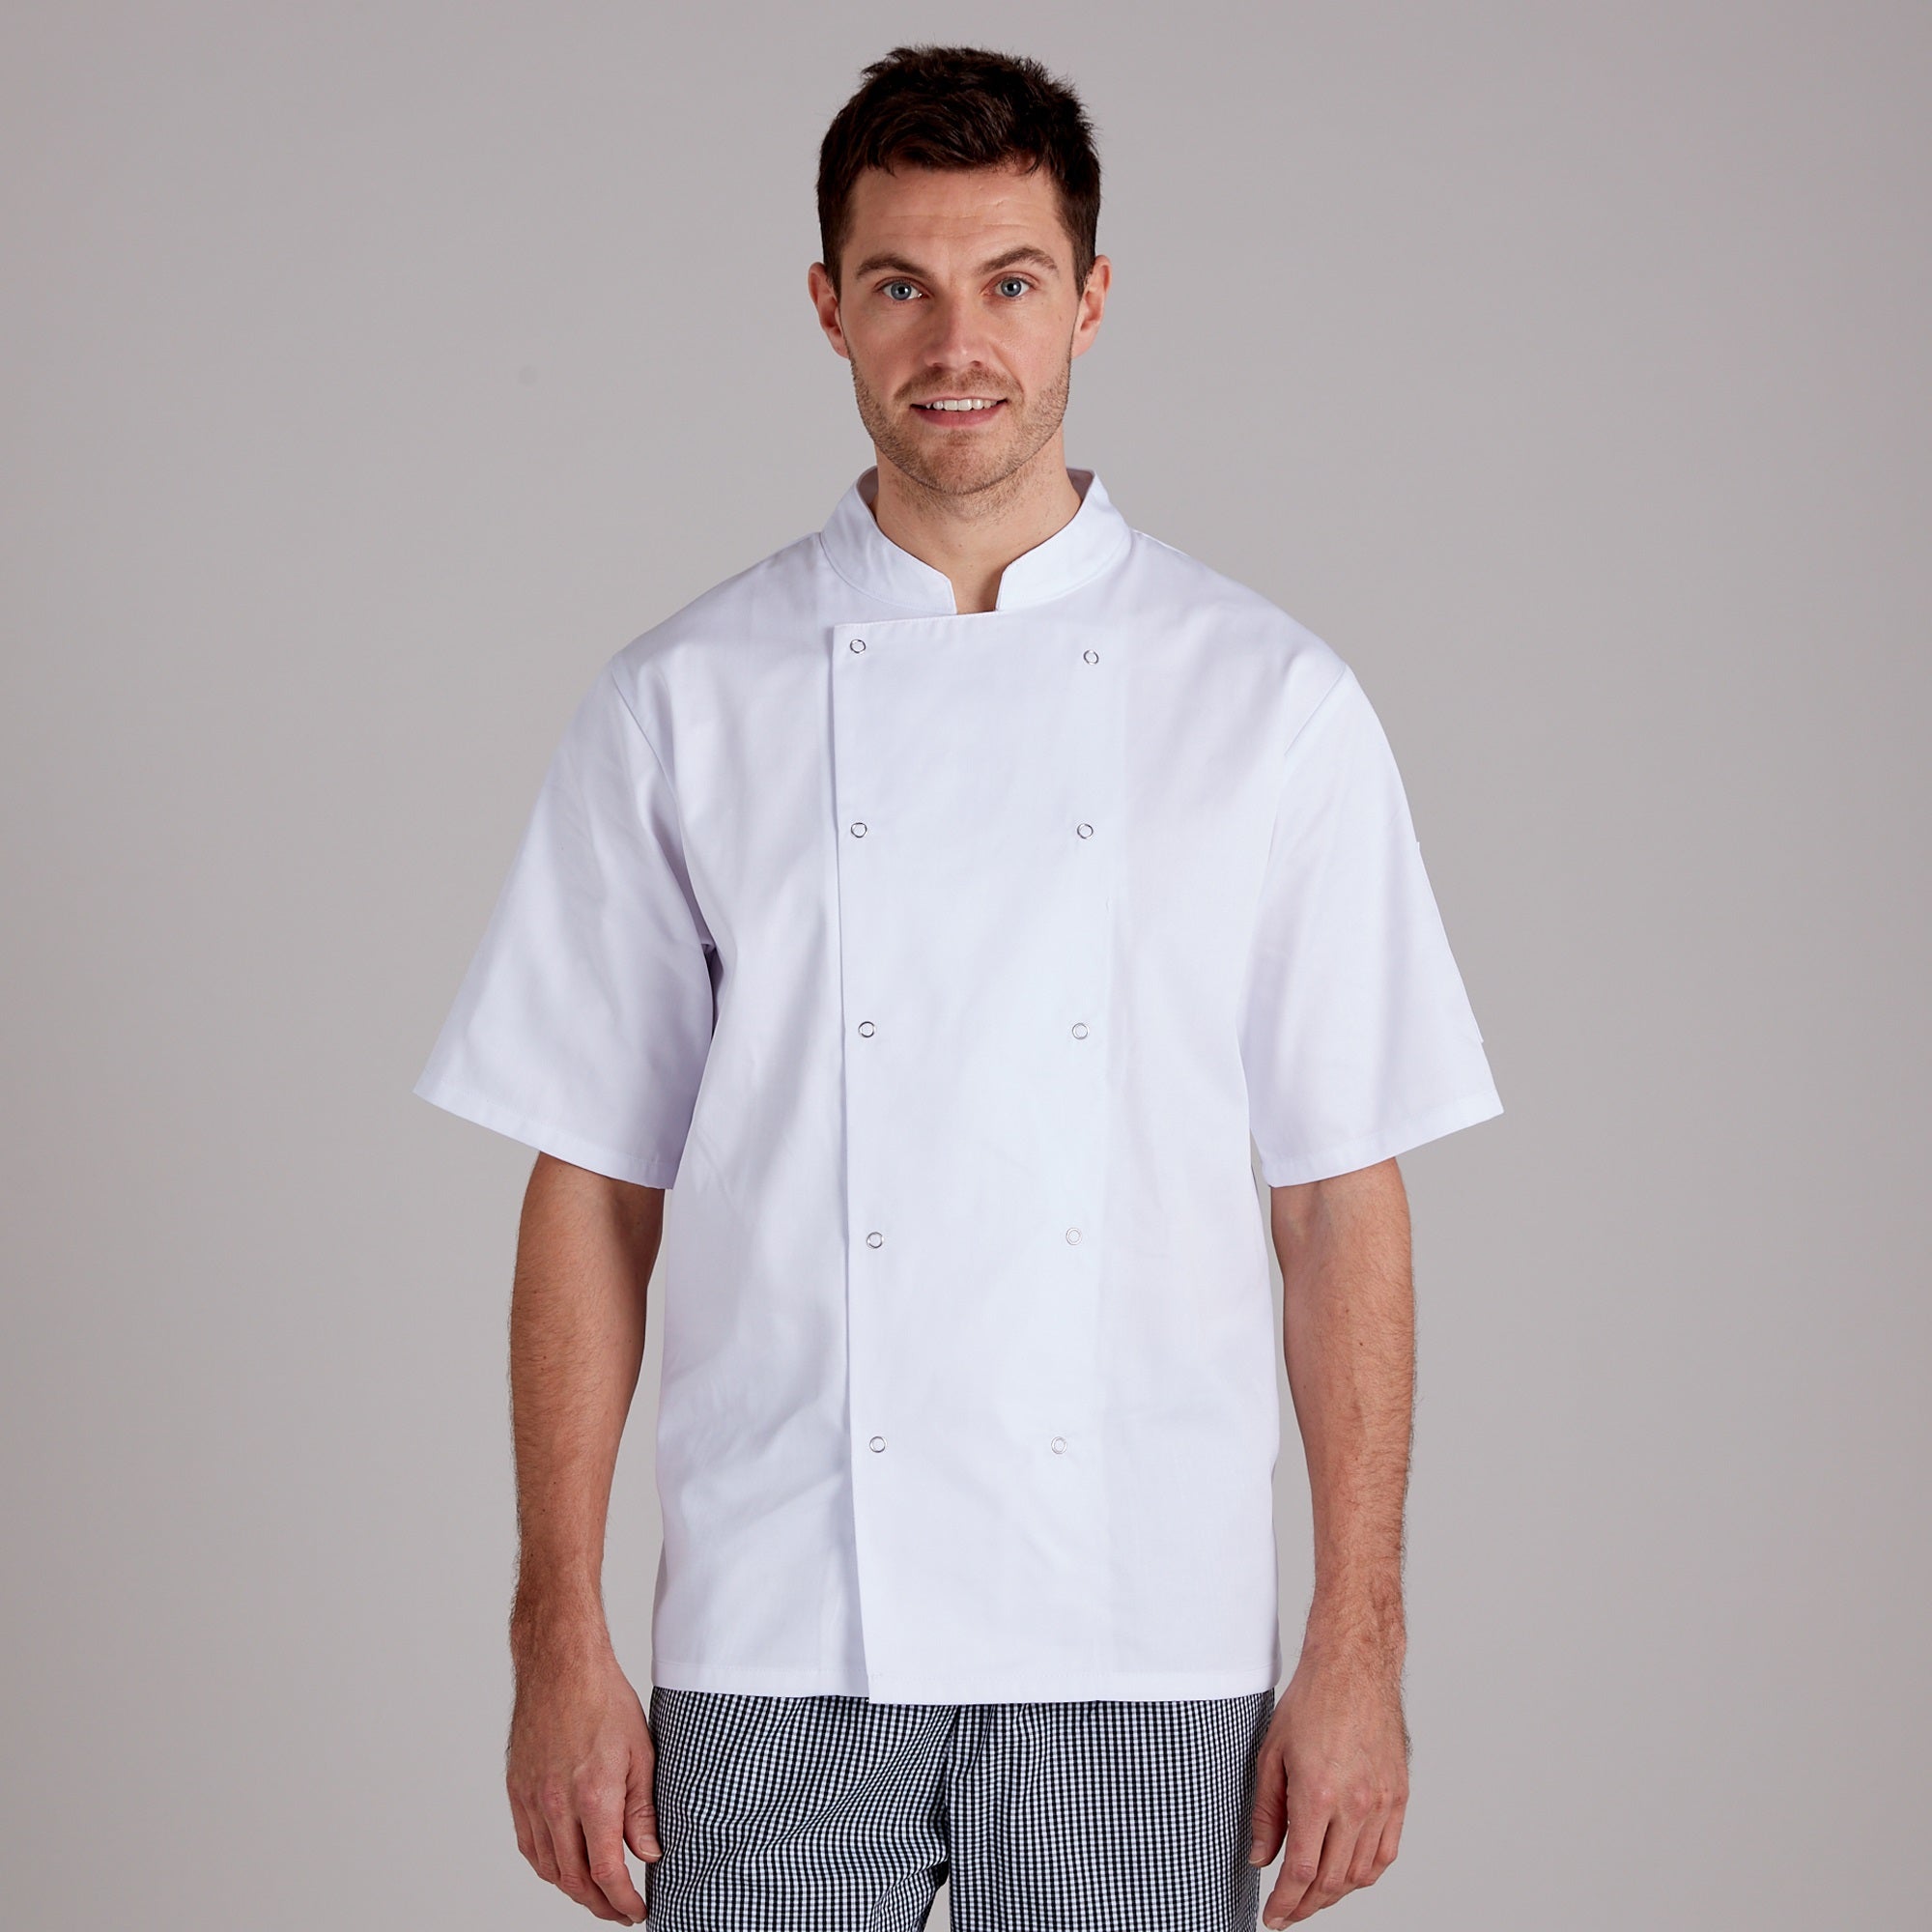 Proluxe Professional Chefs Jacket - Short Sleeve - Unisex - White